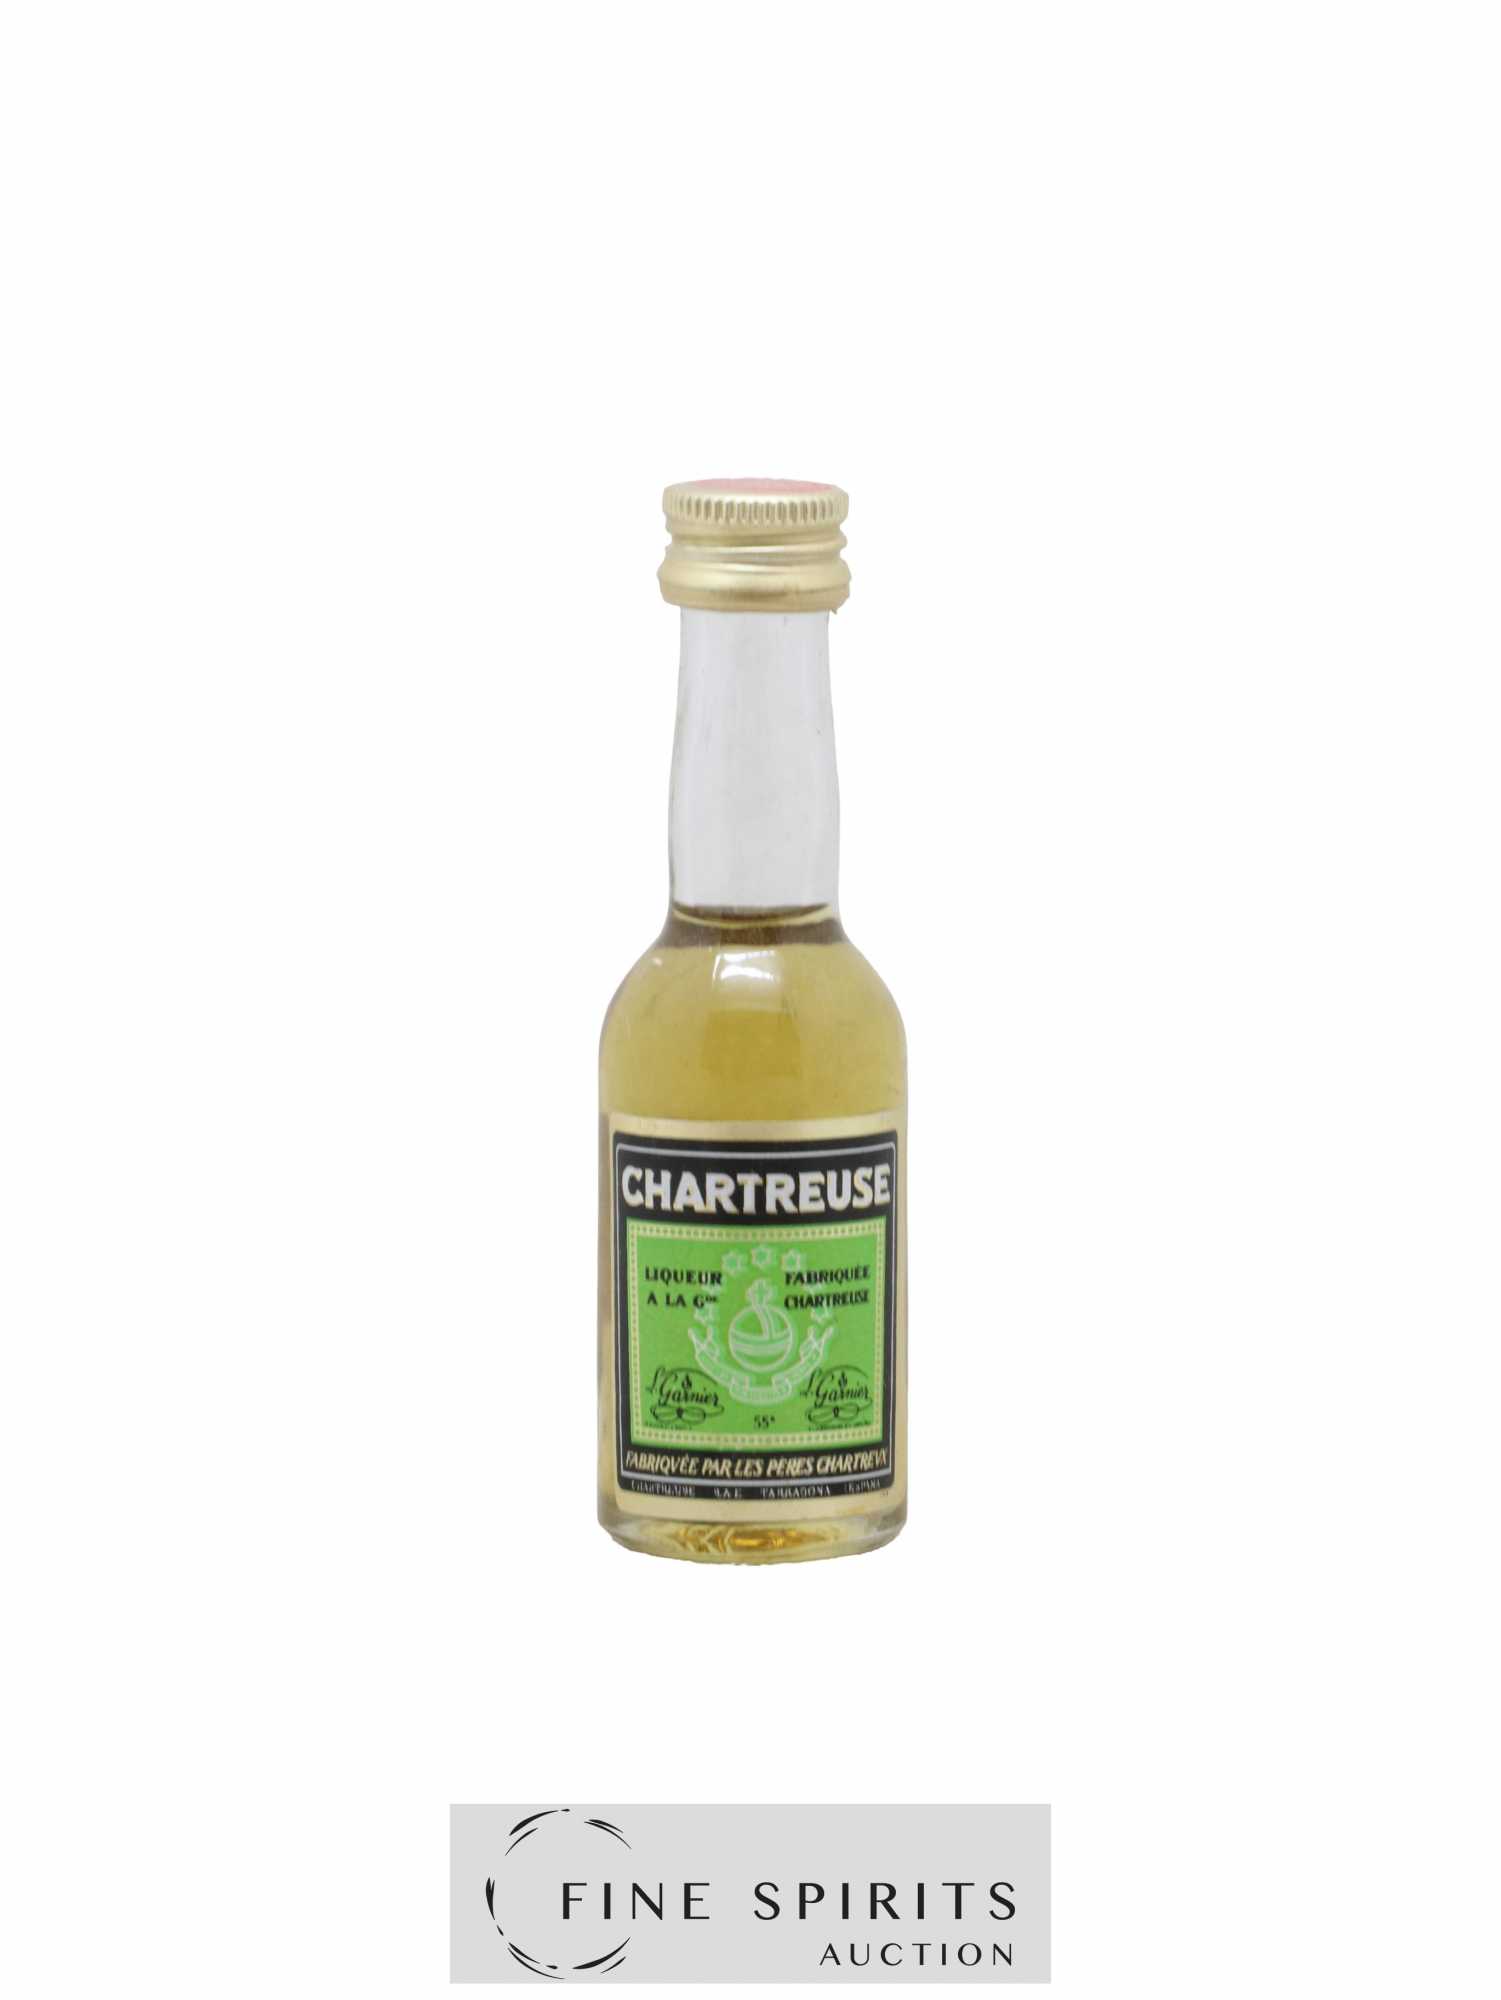 1 bottle (70cl) of CHARTREUSE VERTE TARRAGONA around 198…